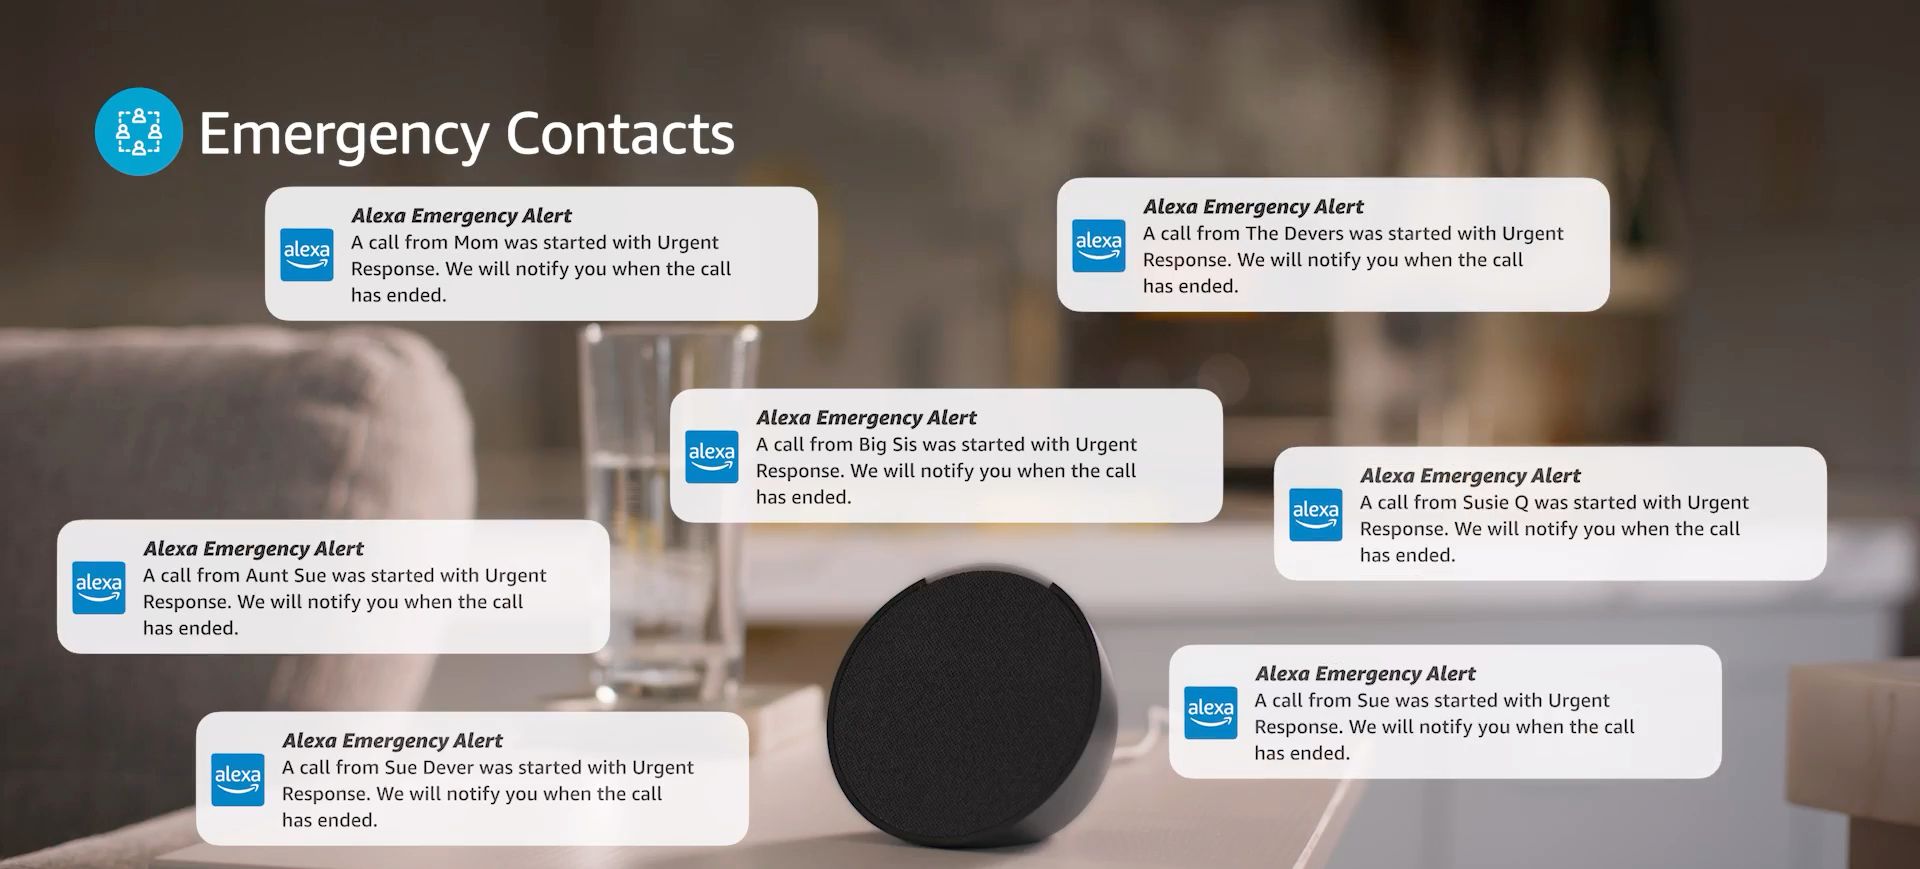 Alexa Emergency Contacts example notifications.